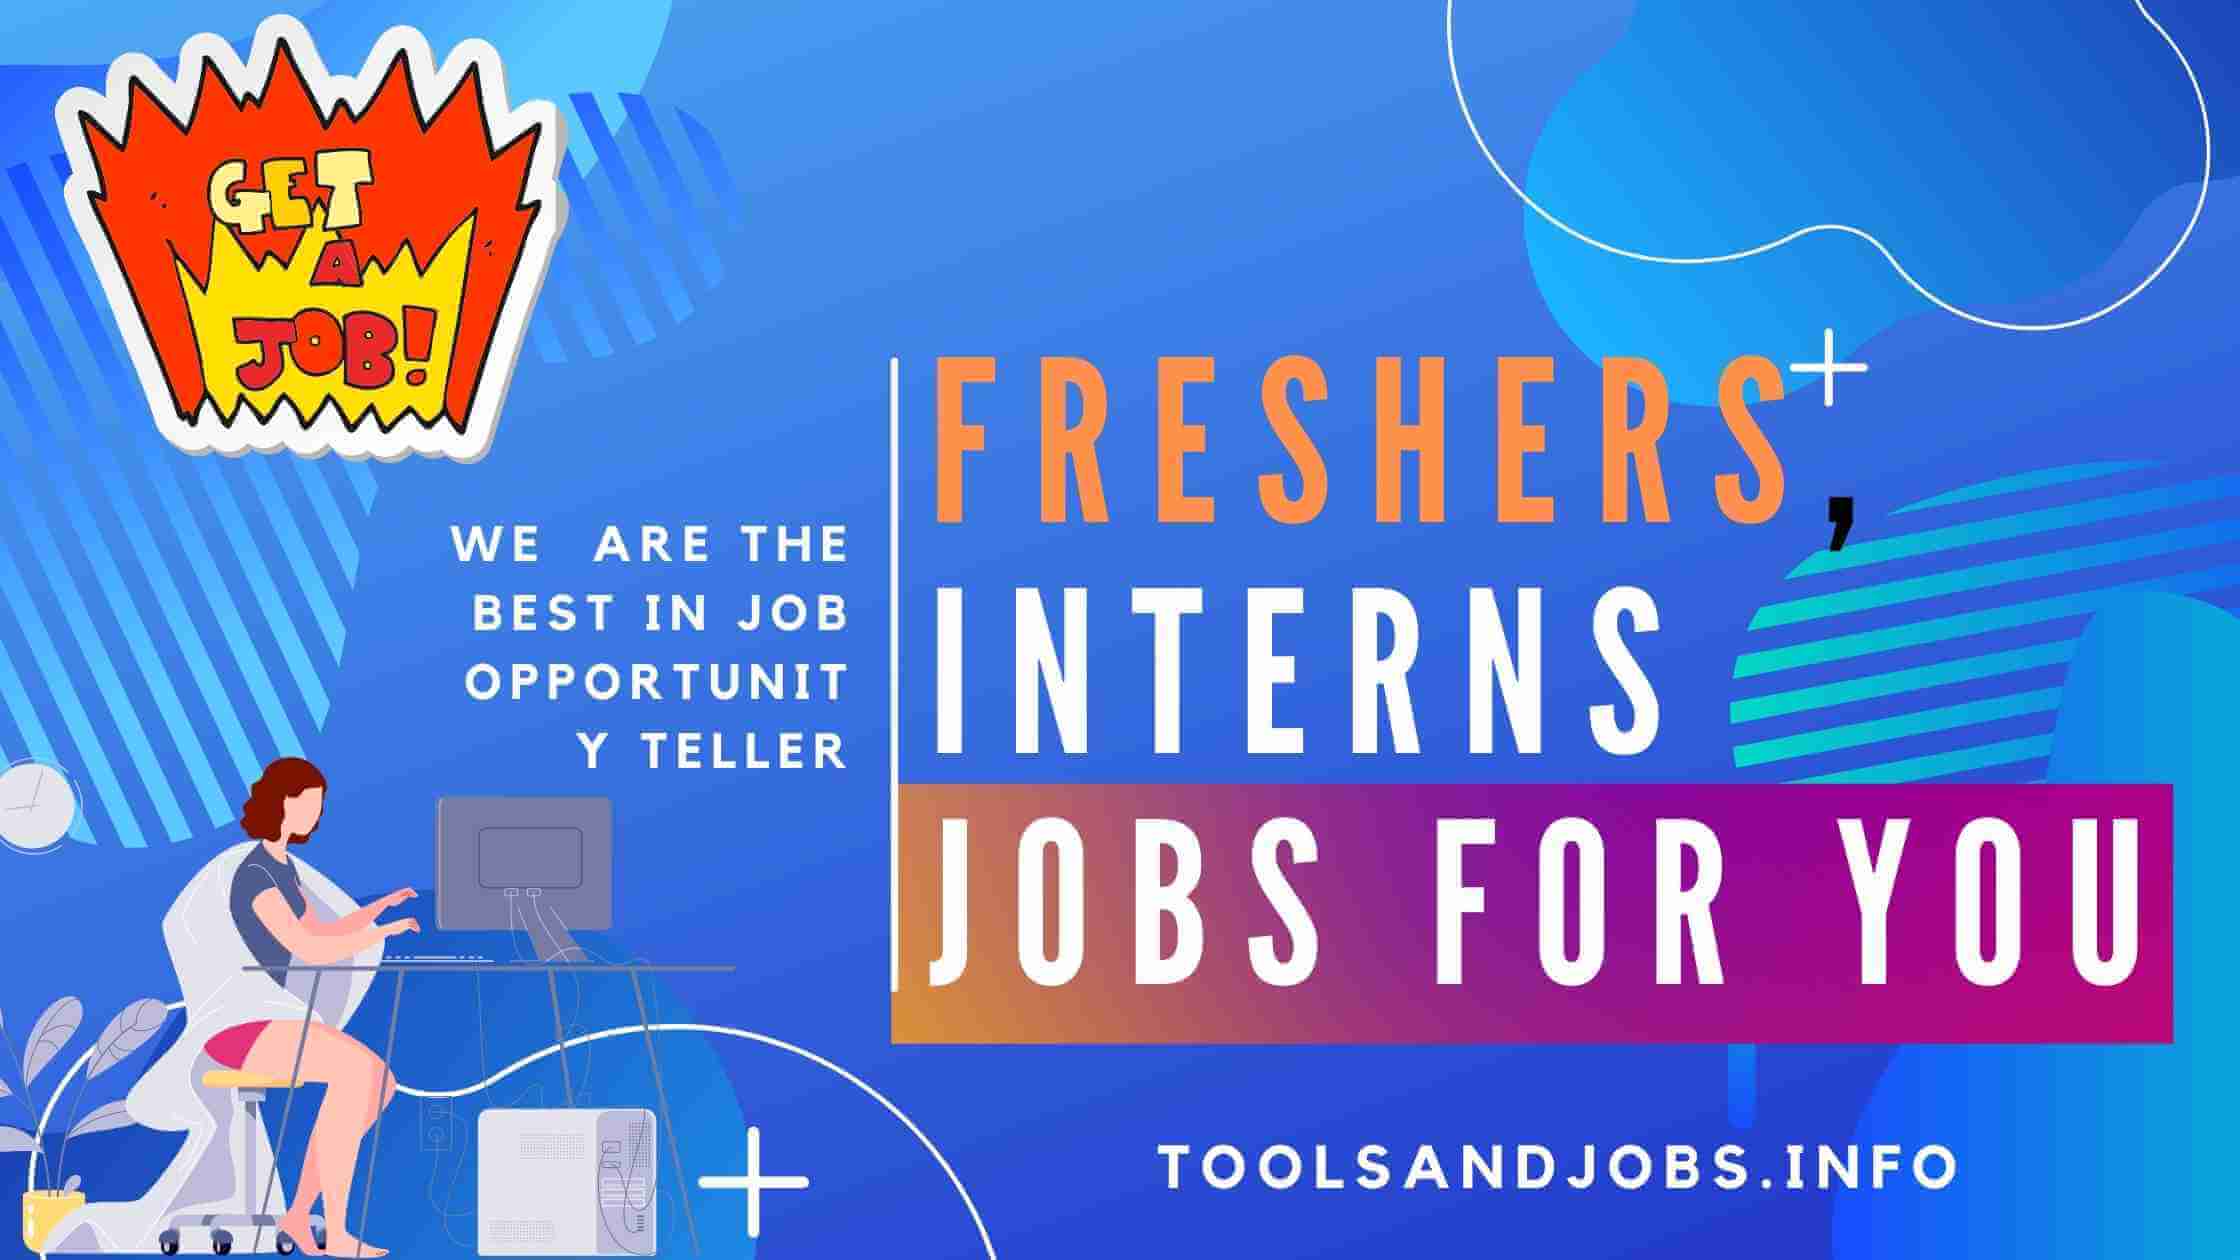 https://res.cloudinary.com/hg6hswtwo/image/upload/v1/media/pics/Freshers_interns_jobs-best_job_site-toolsandjobs_lt4u0n